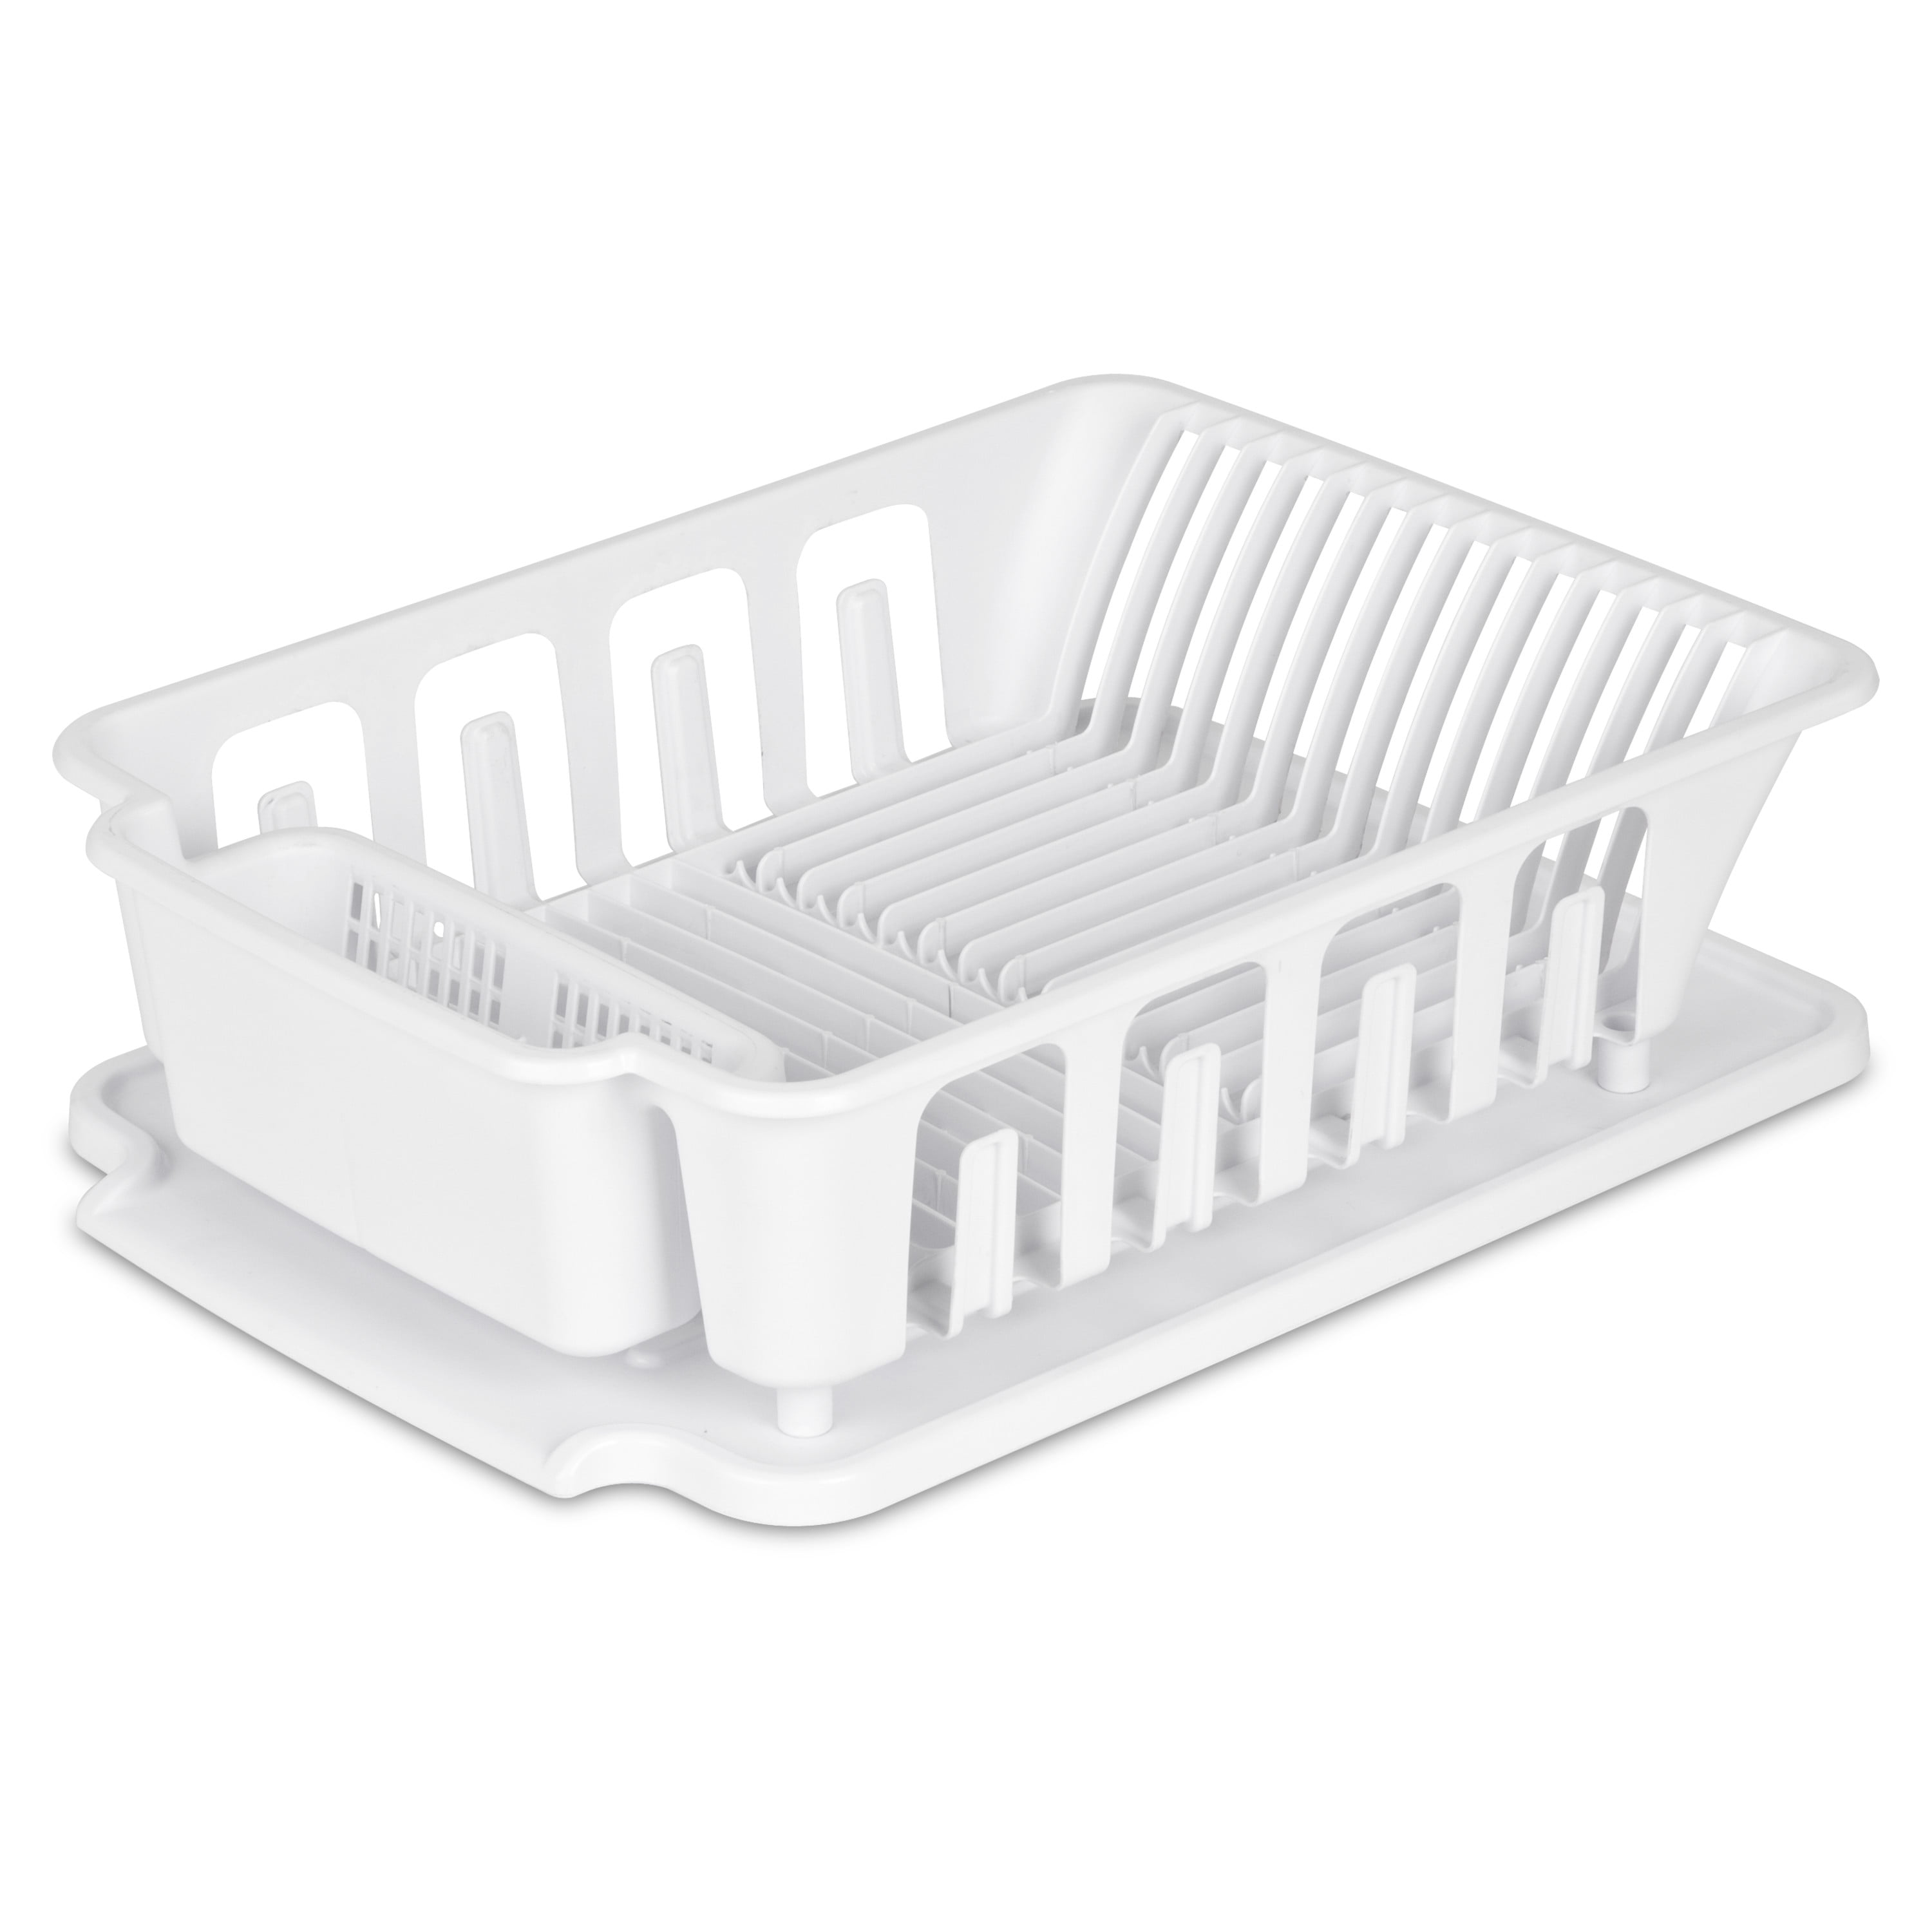 45 x 29.7 x 8cm, Transparent PLASTIFIC Plastic Dish Drainer Plate Cutlery Rack Kitchen Sink Utensil Draining Cup Holder